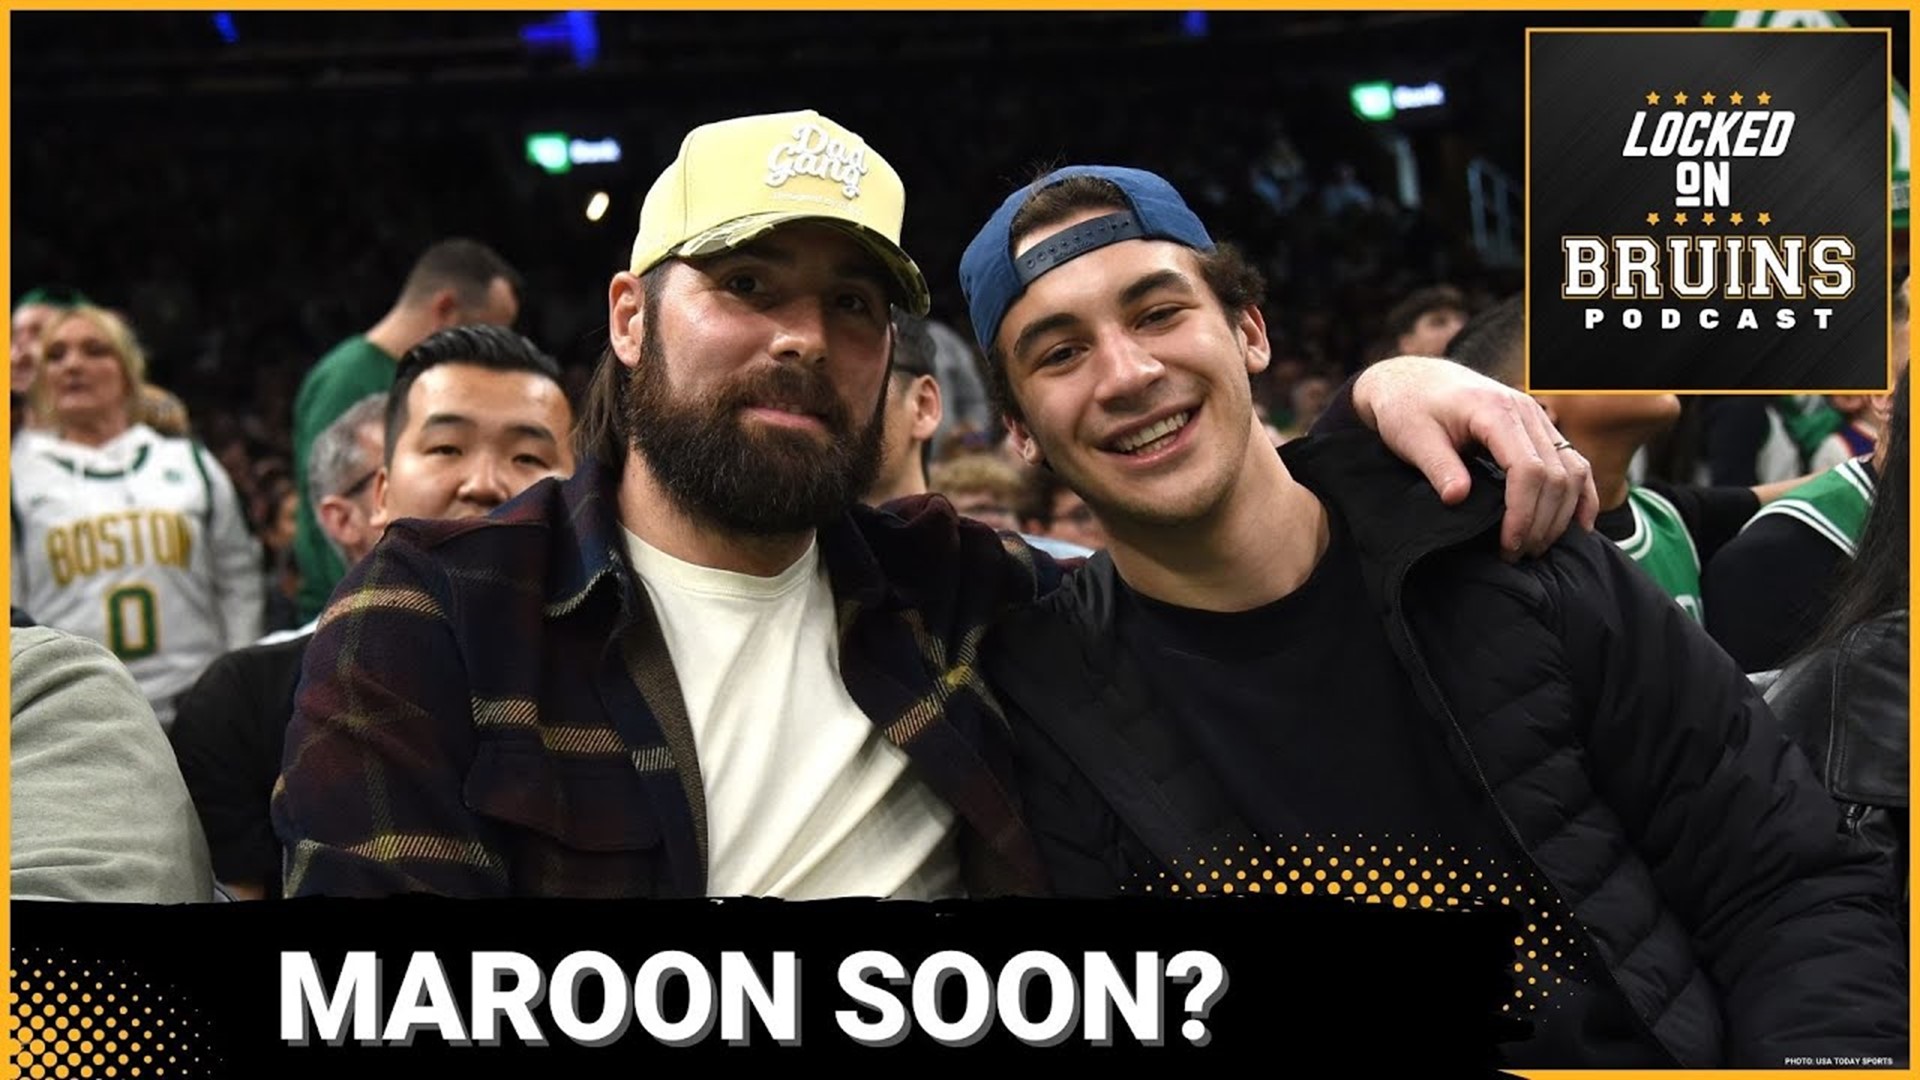 Bruins sign NCAA forward Jaxon Nelson, Pat Maroon makes practice debut, Predators preview!